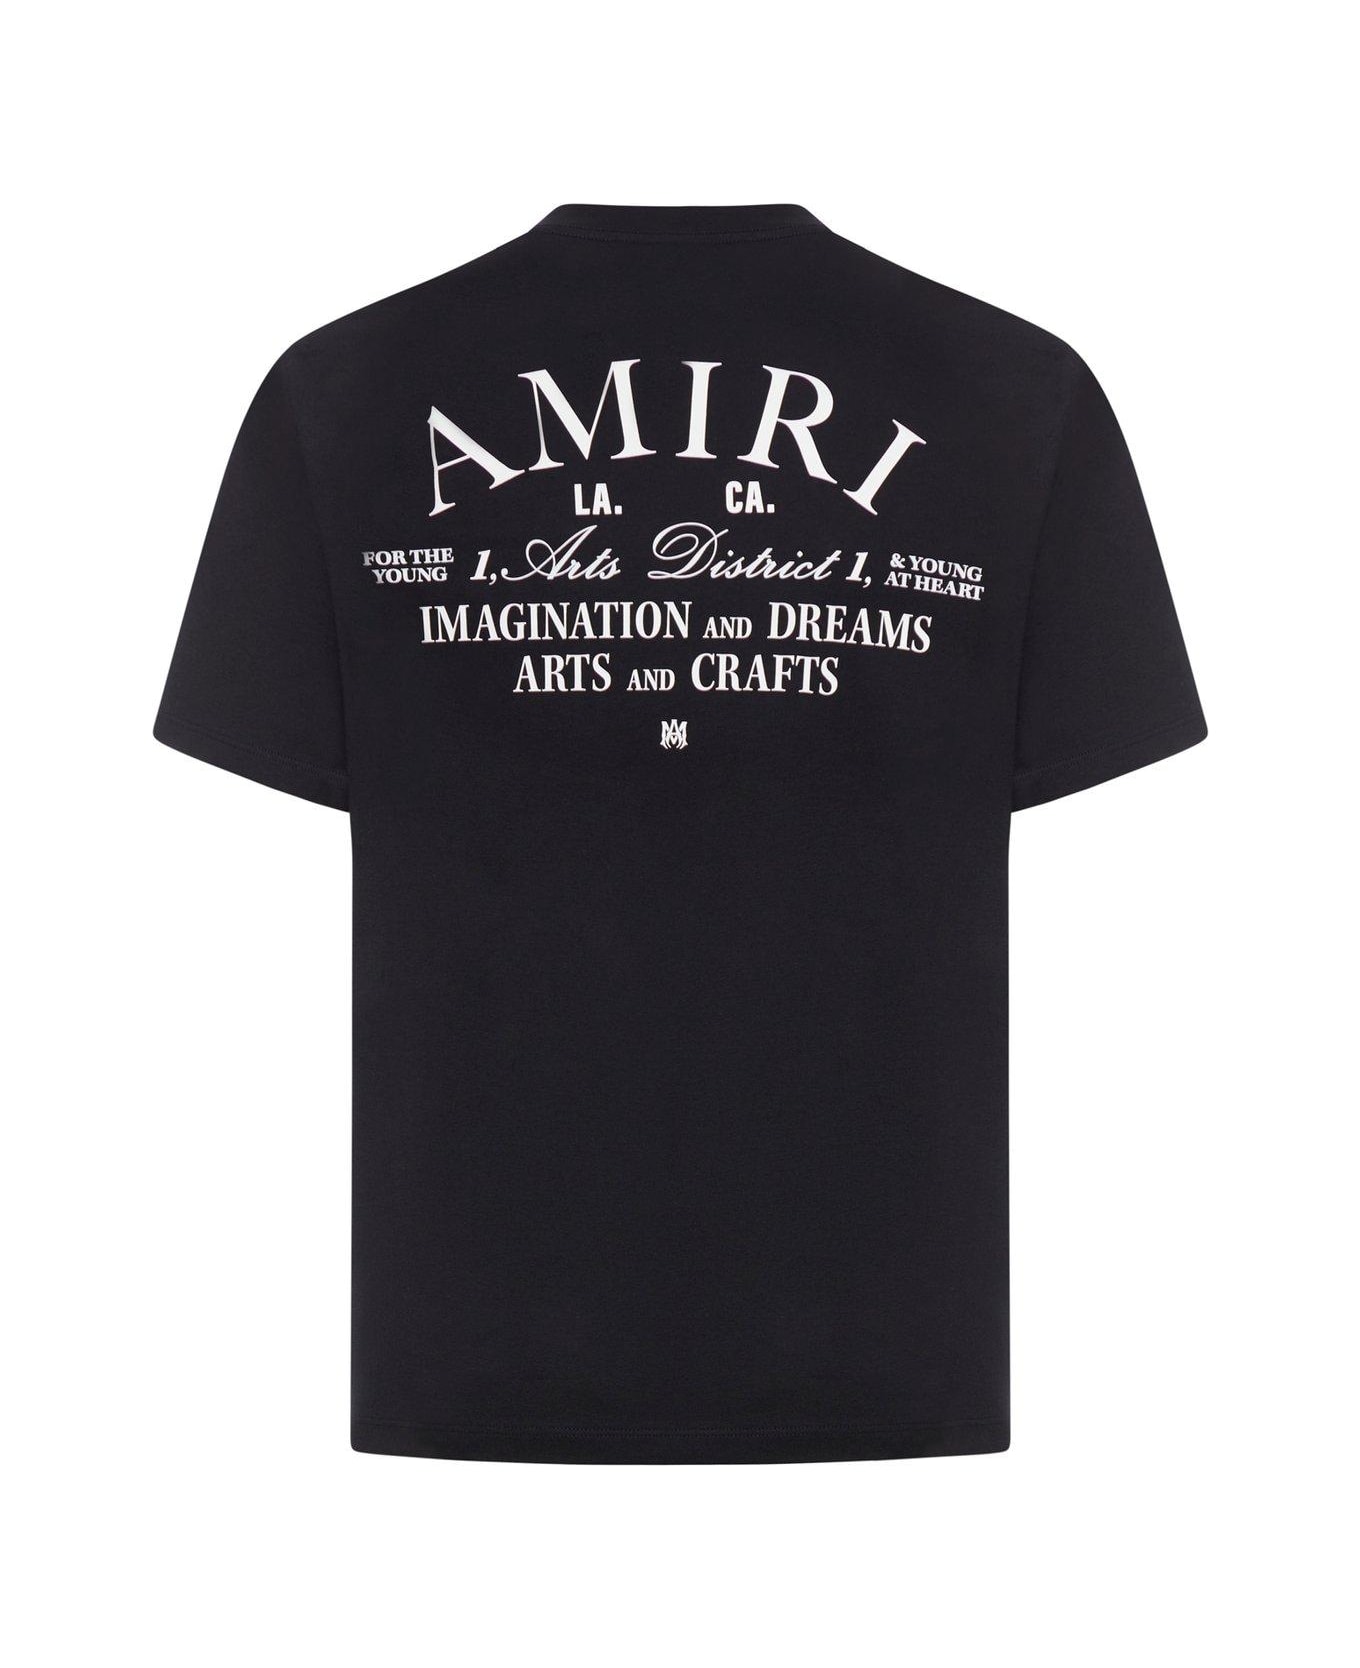 AMIRI Logo Printed Jersey Art District T-shirt - Black